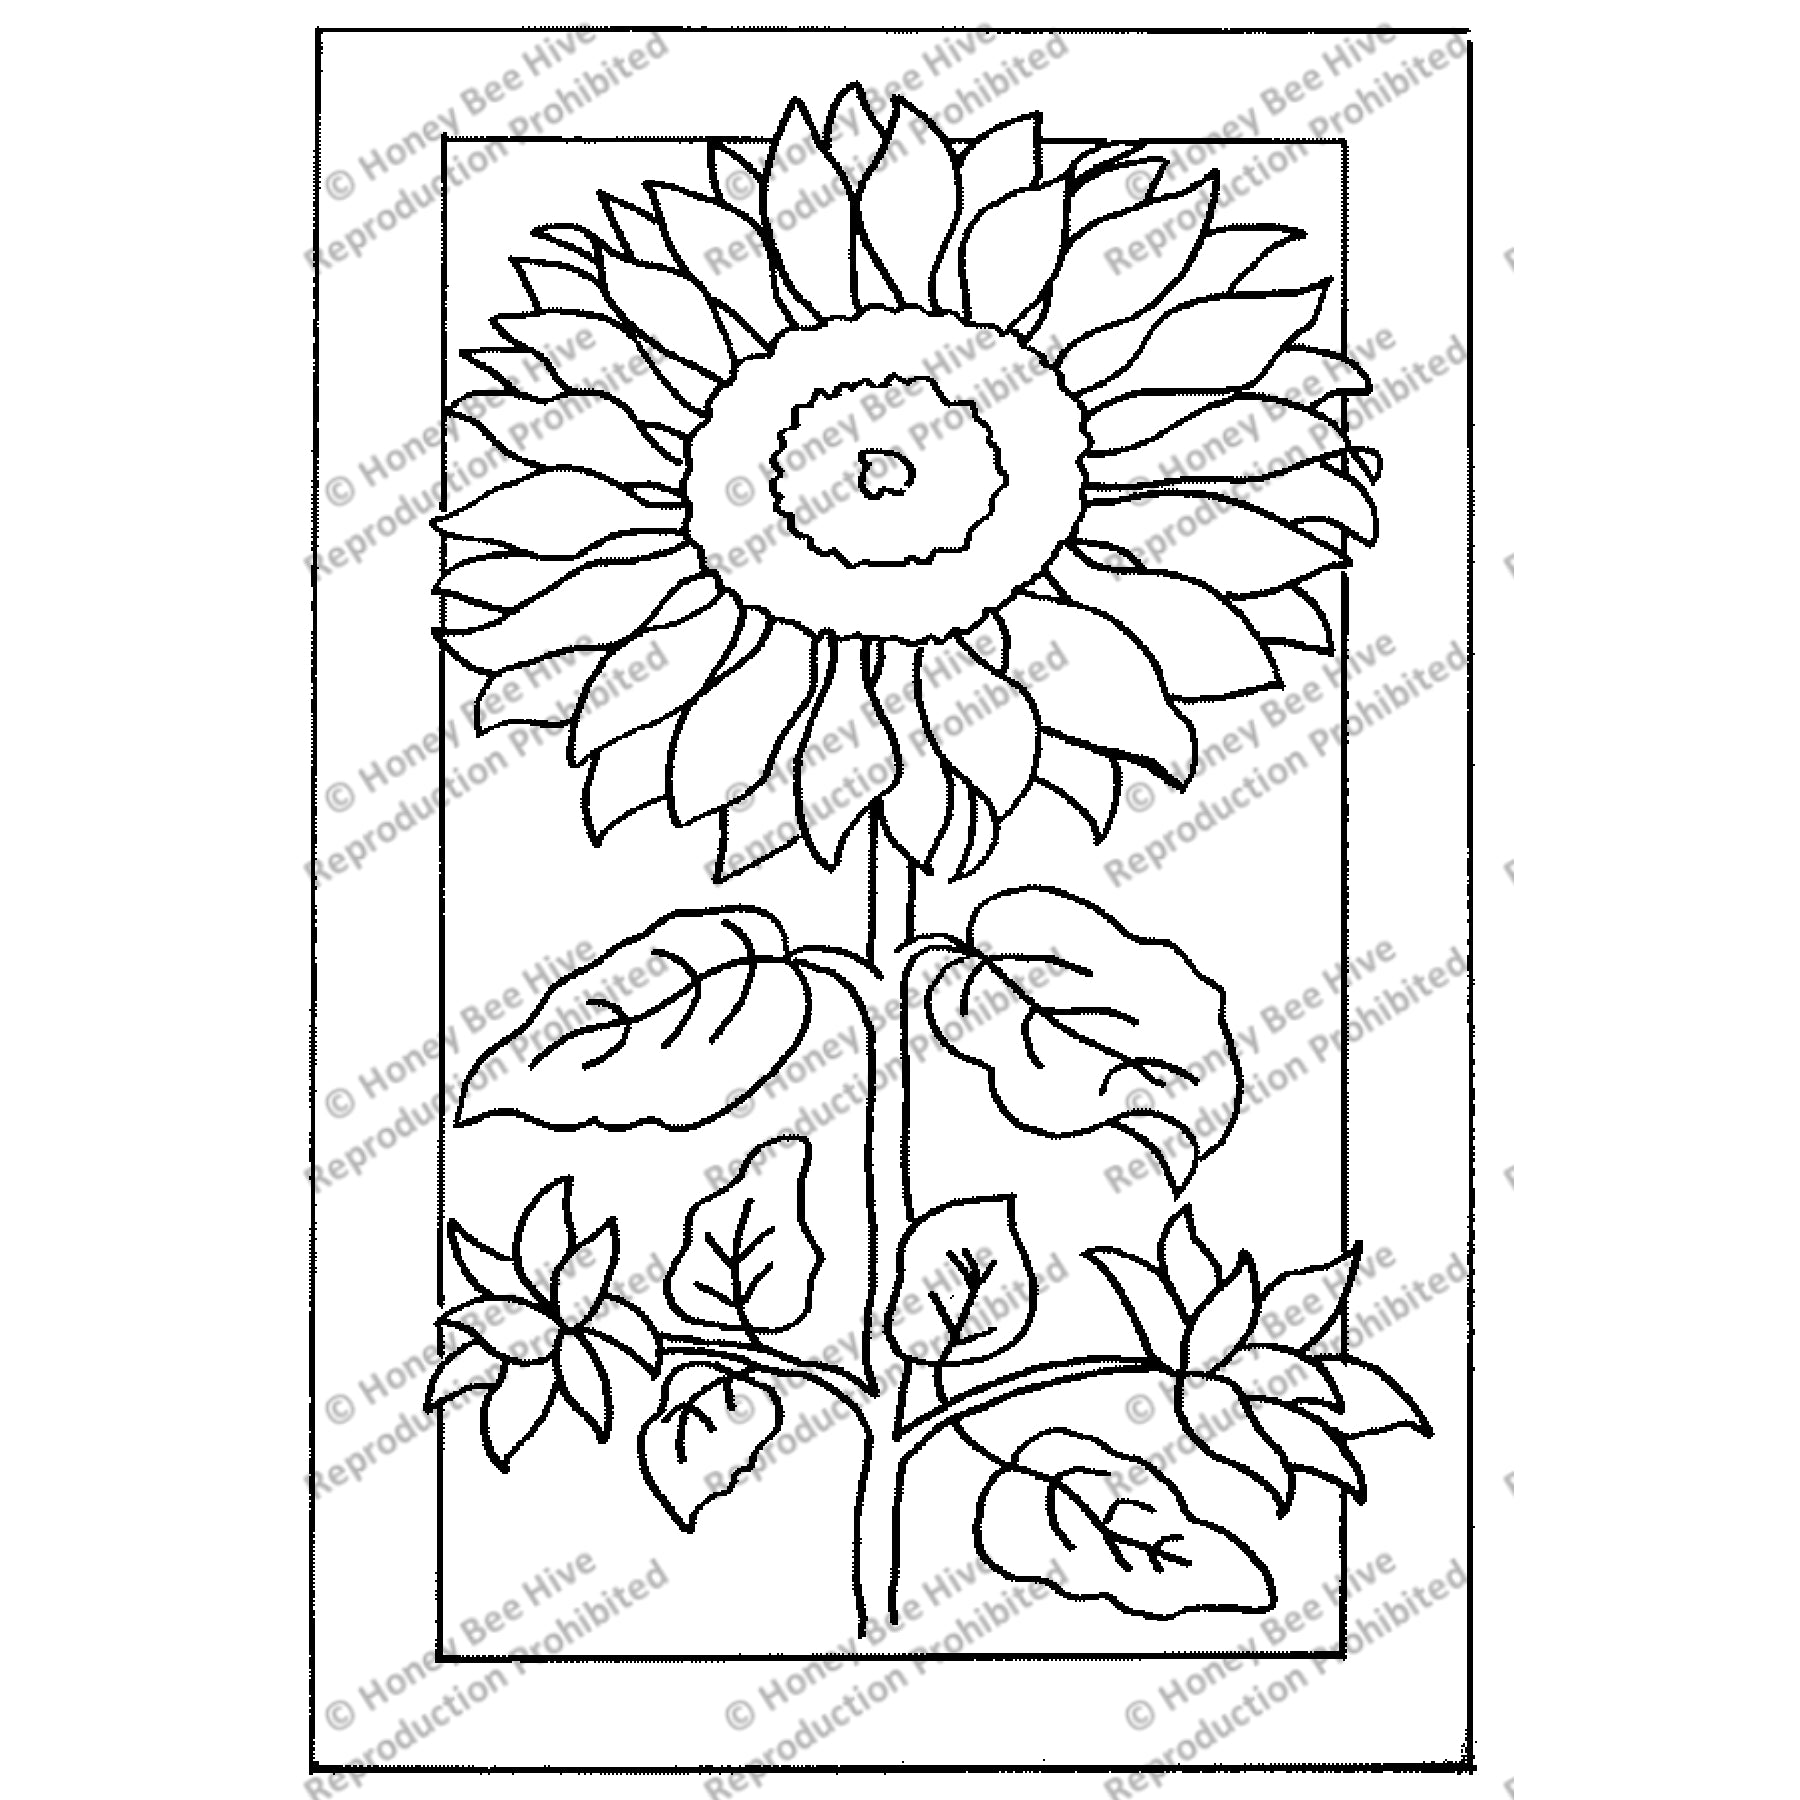 Sunflower, rug hooking pattern